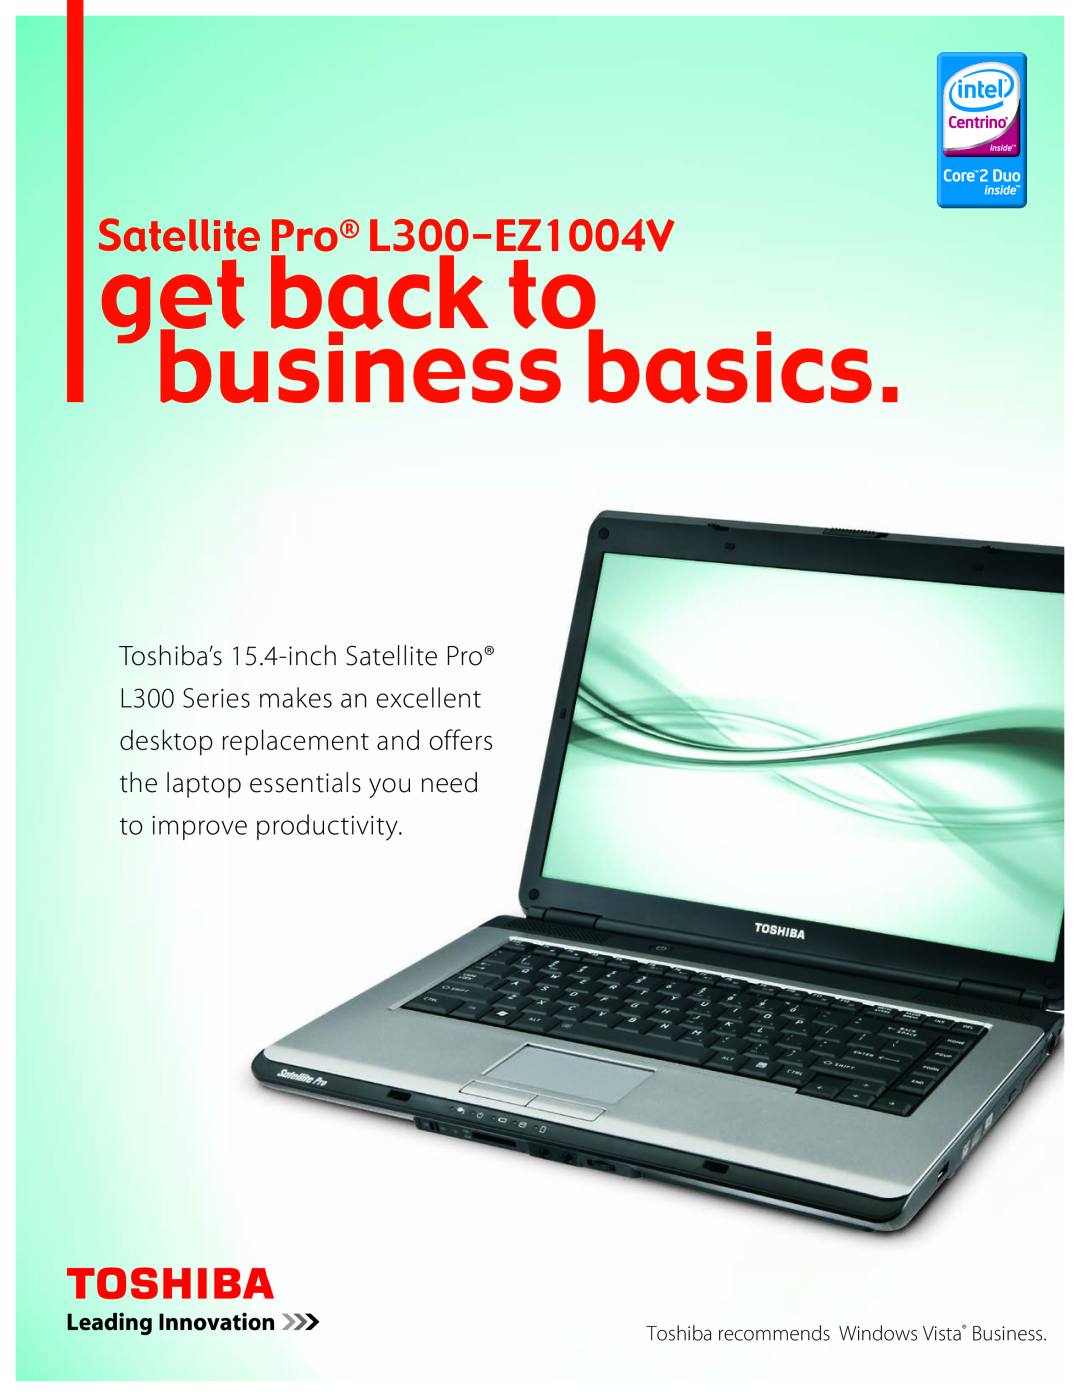 Toshiba manual get back to business basics, atellite Pro L300-EZ1004V, Toshiba recommends Windows Vista Business 